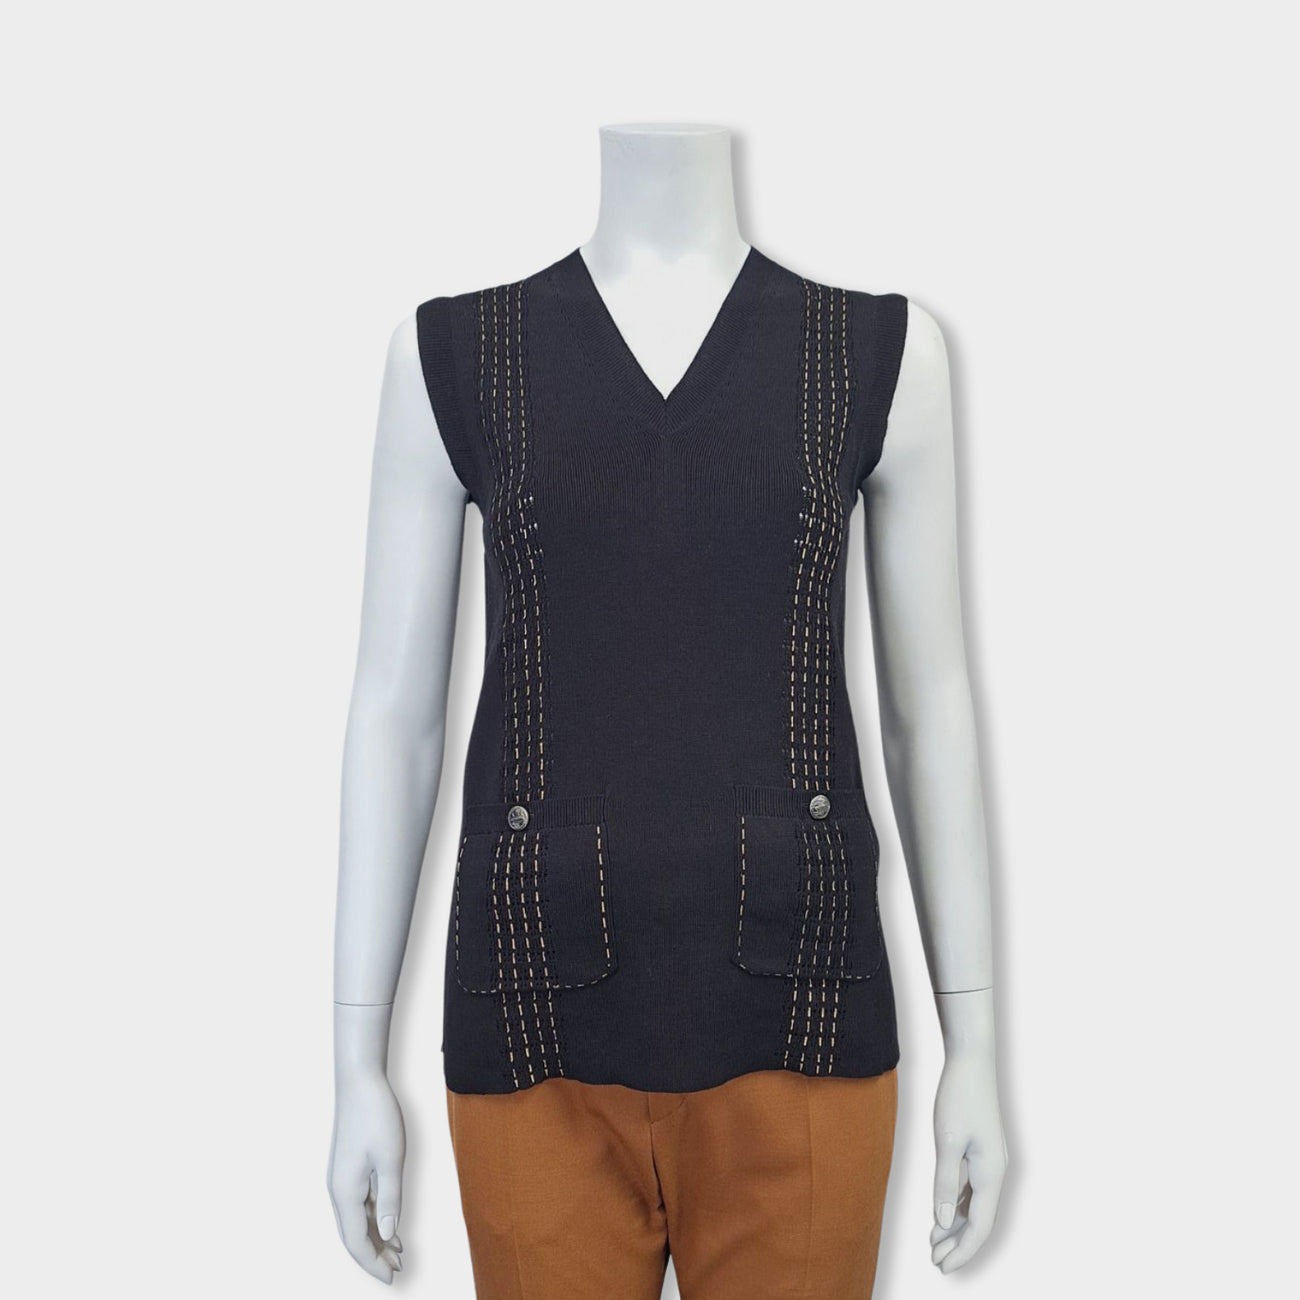 CHANEL black knit top with front pocket details – Loop Generation